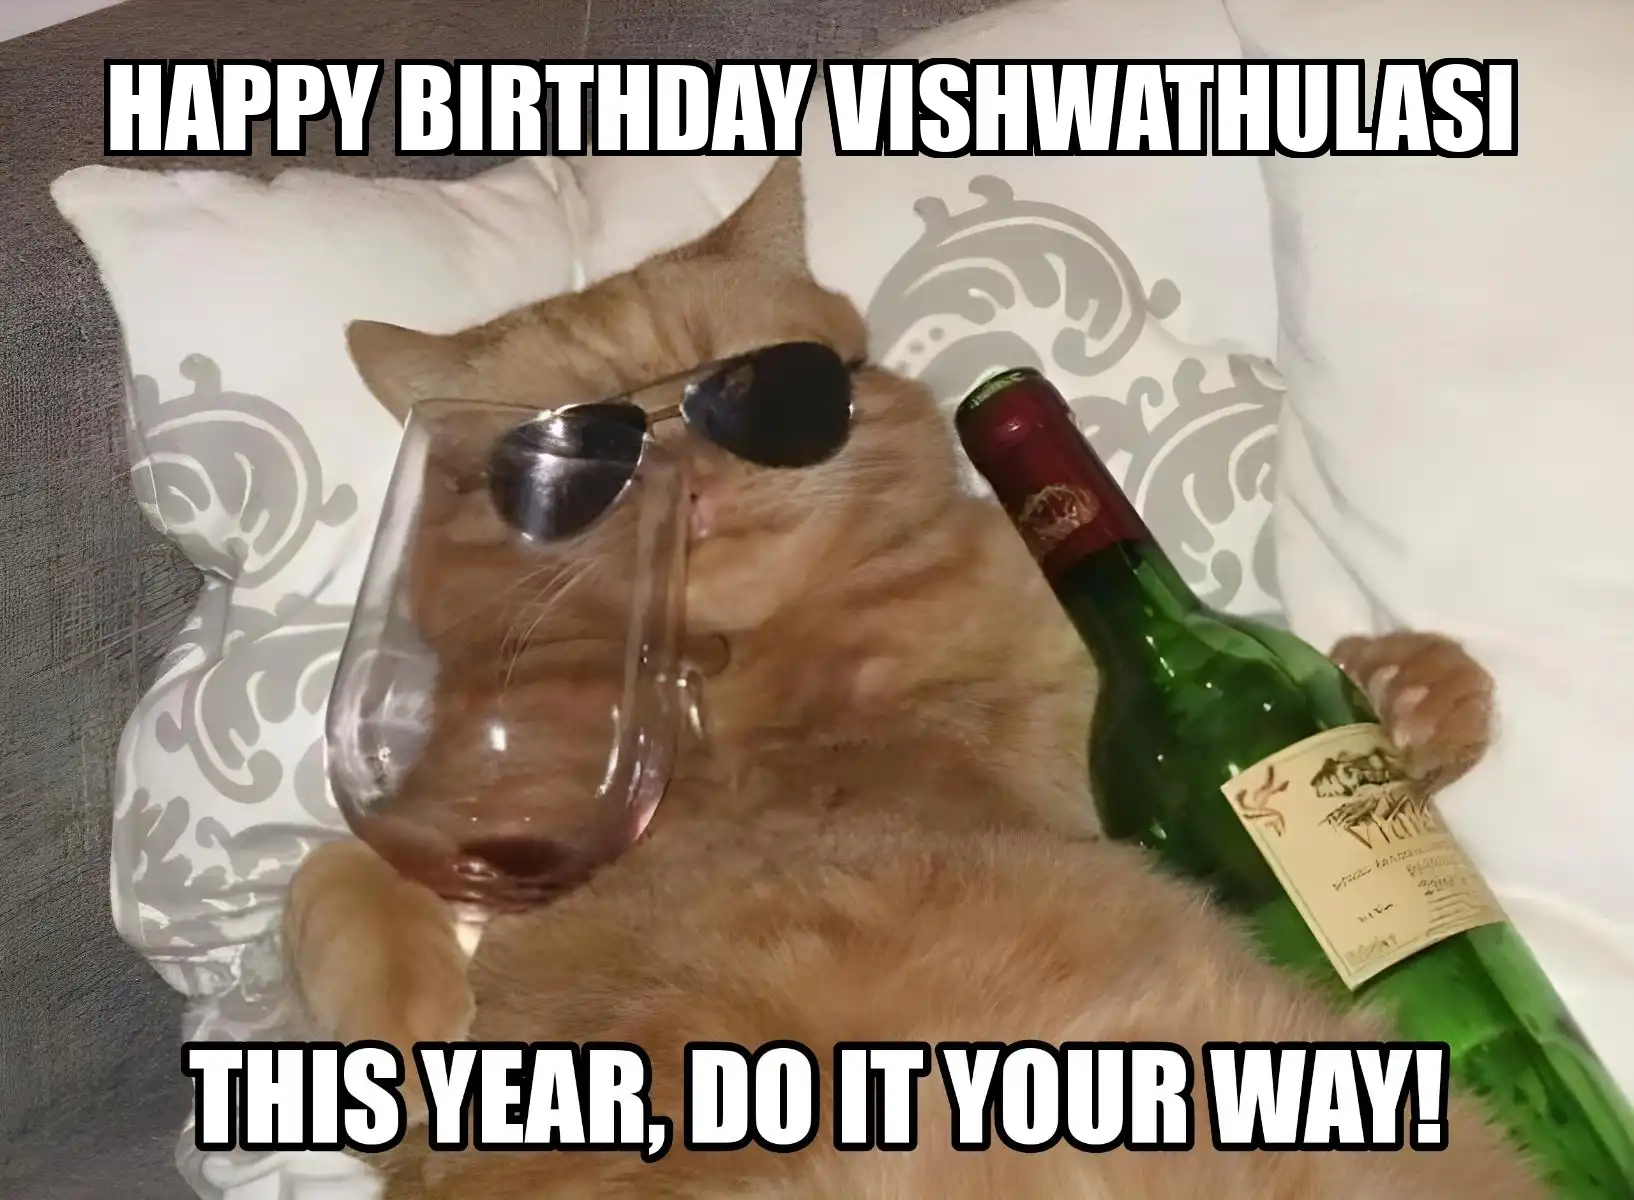 Happy Birthday Vishwathulasi This Year Do It Your Way Meme